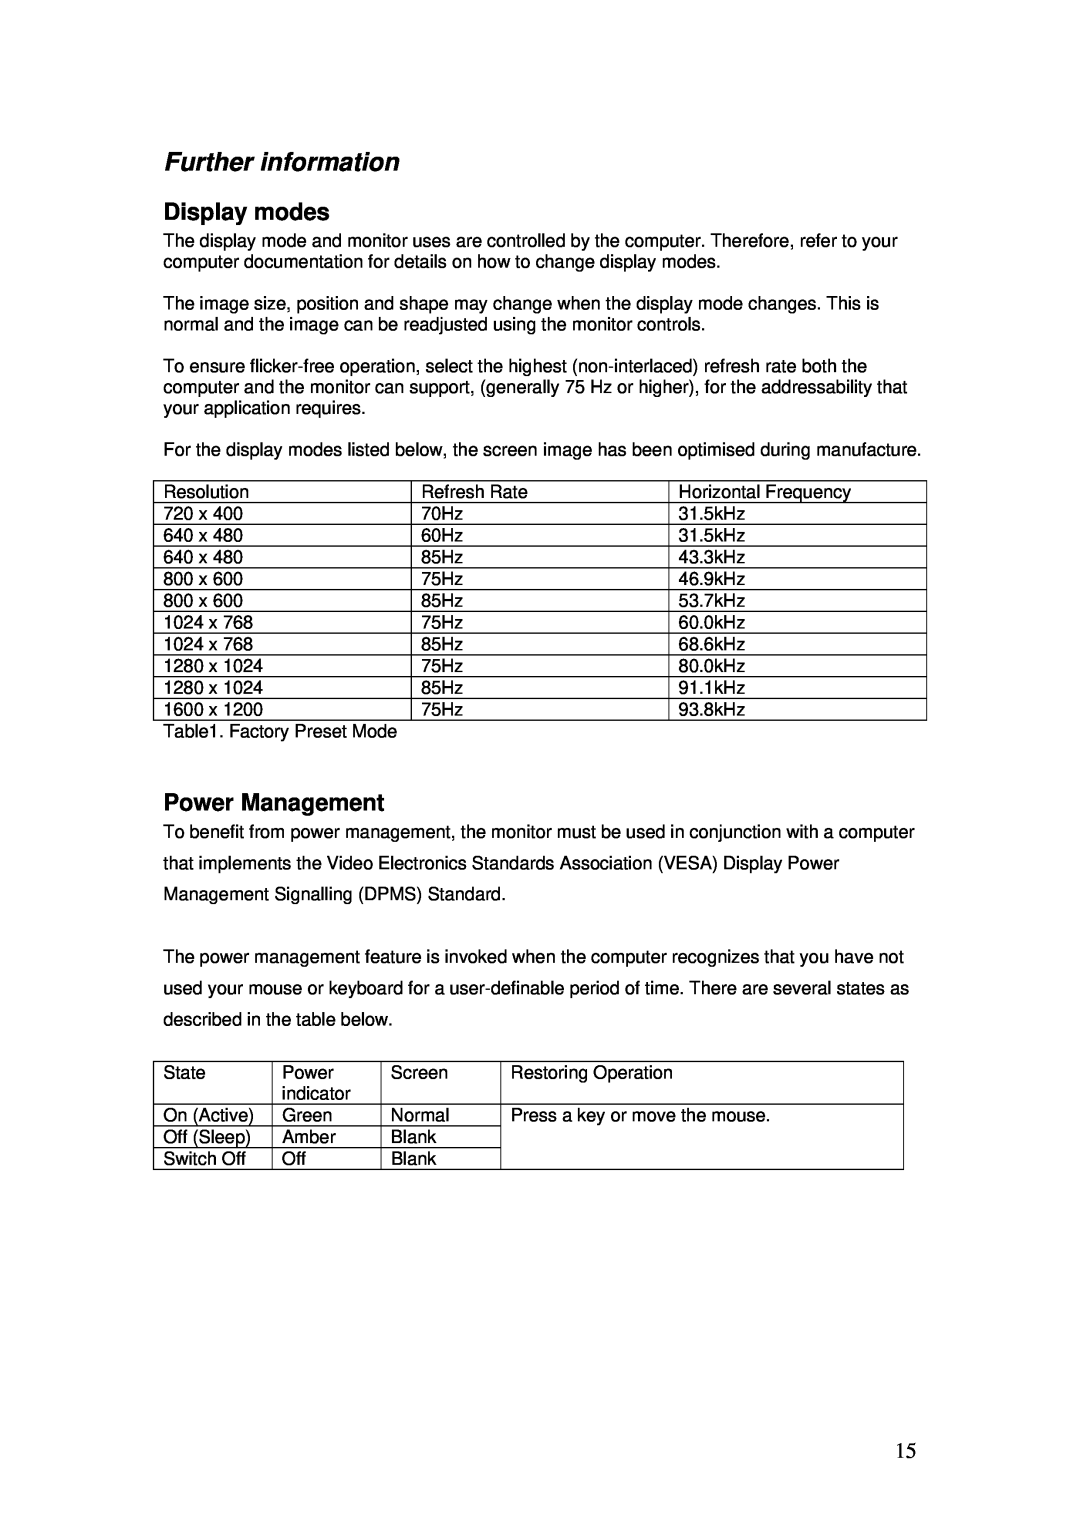 Lenovo C190 manual Further information, Display modes, Power Management 